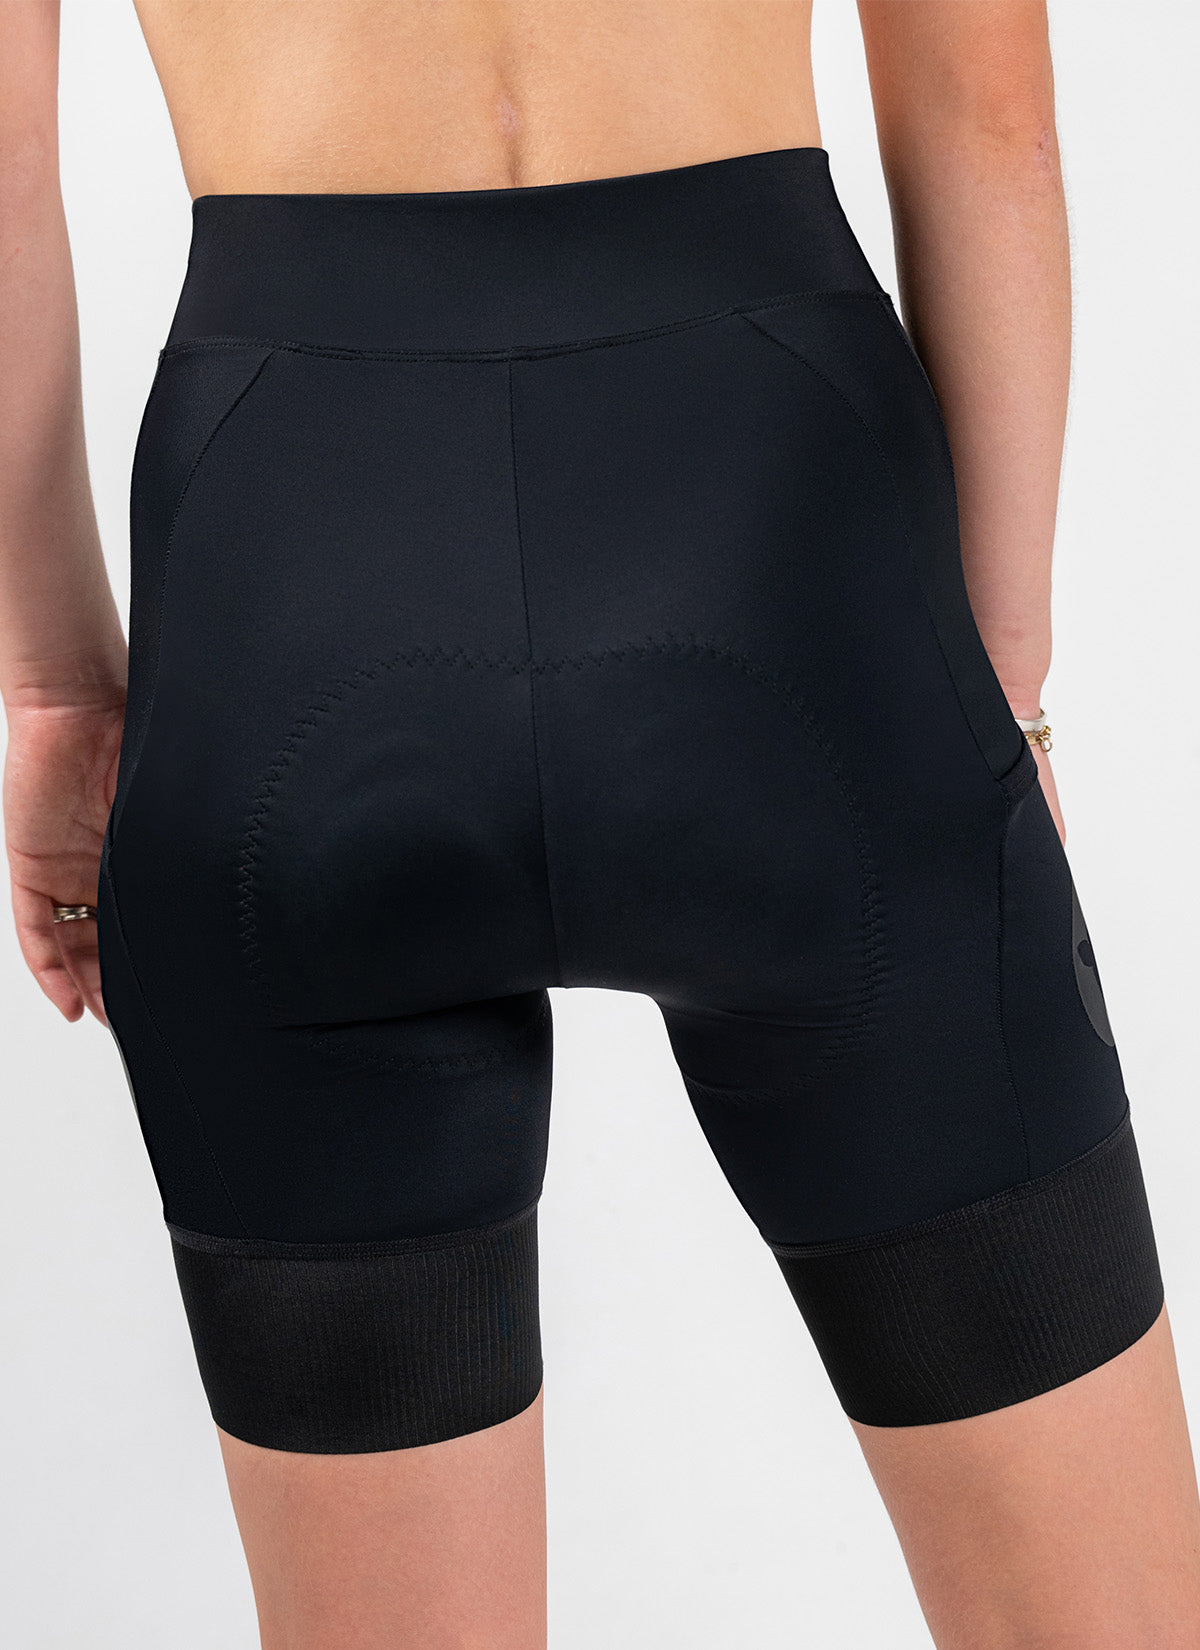 Women's Adventure Cargo Shorts - Black